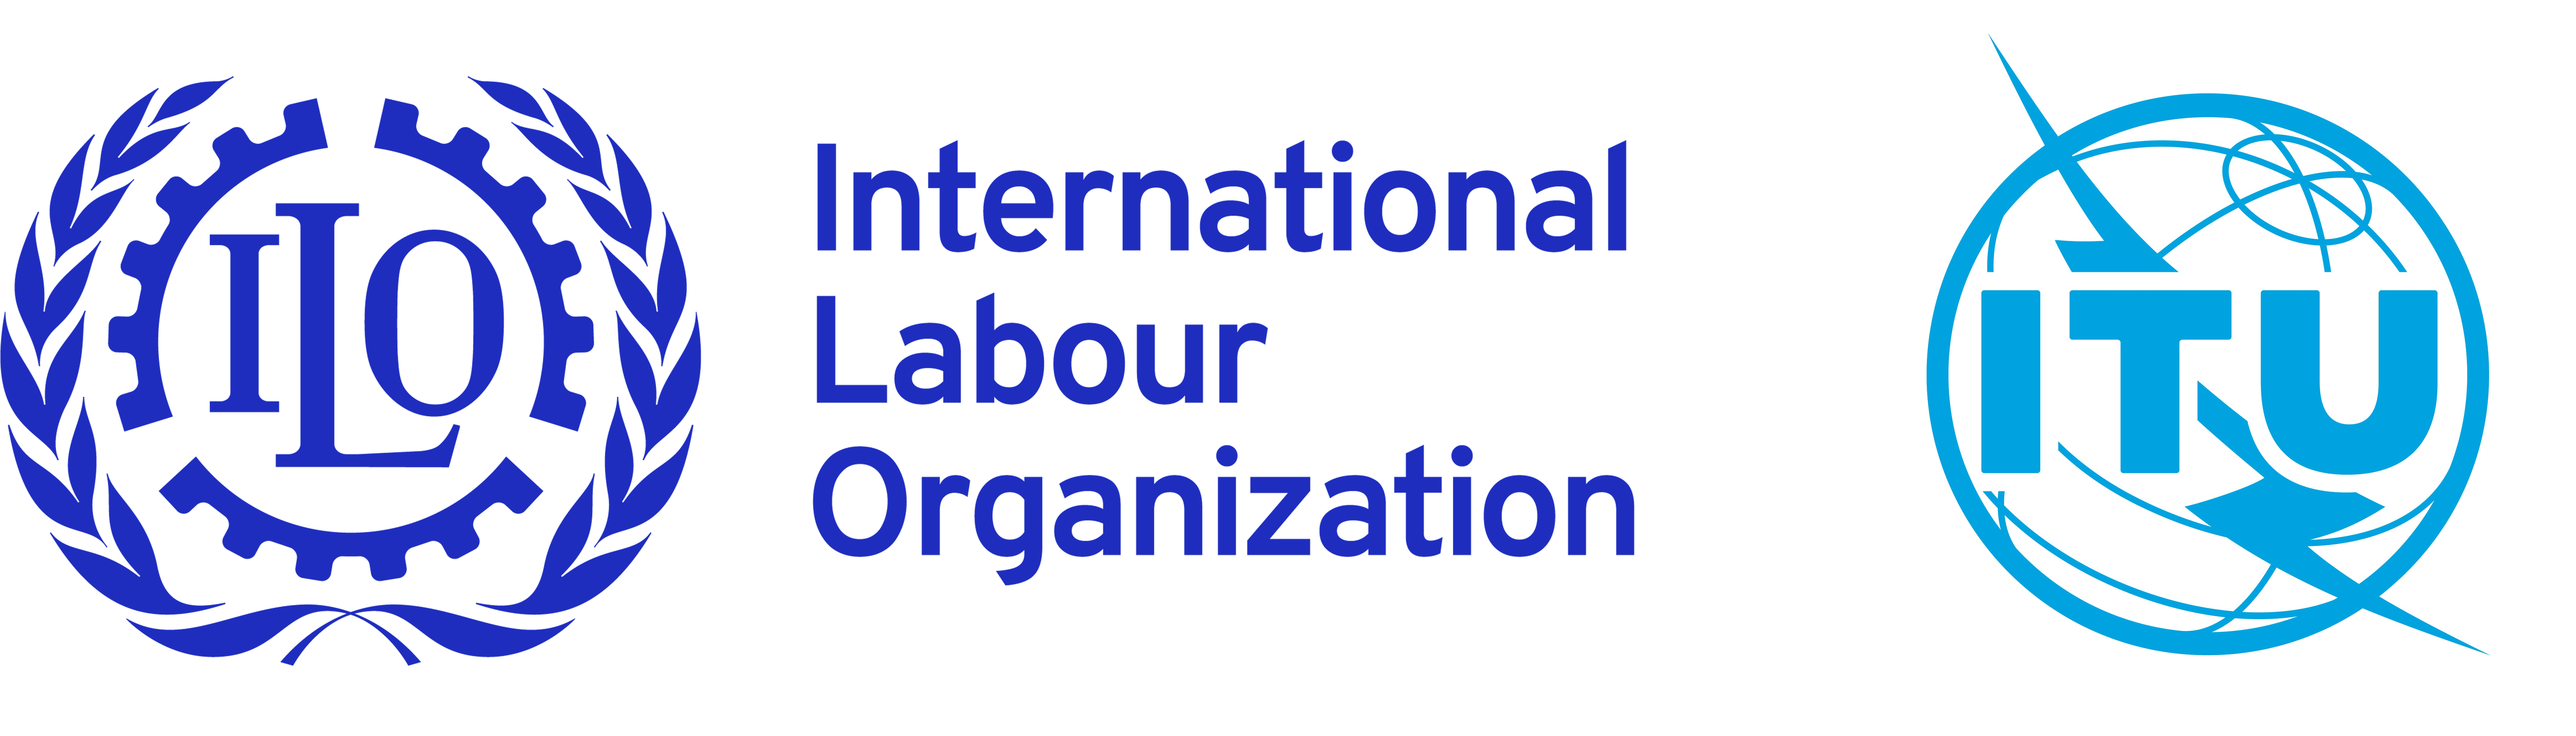 ITU-ILO logo